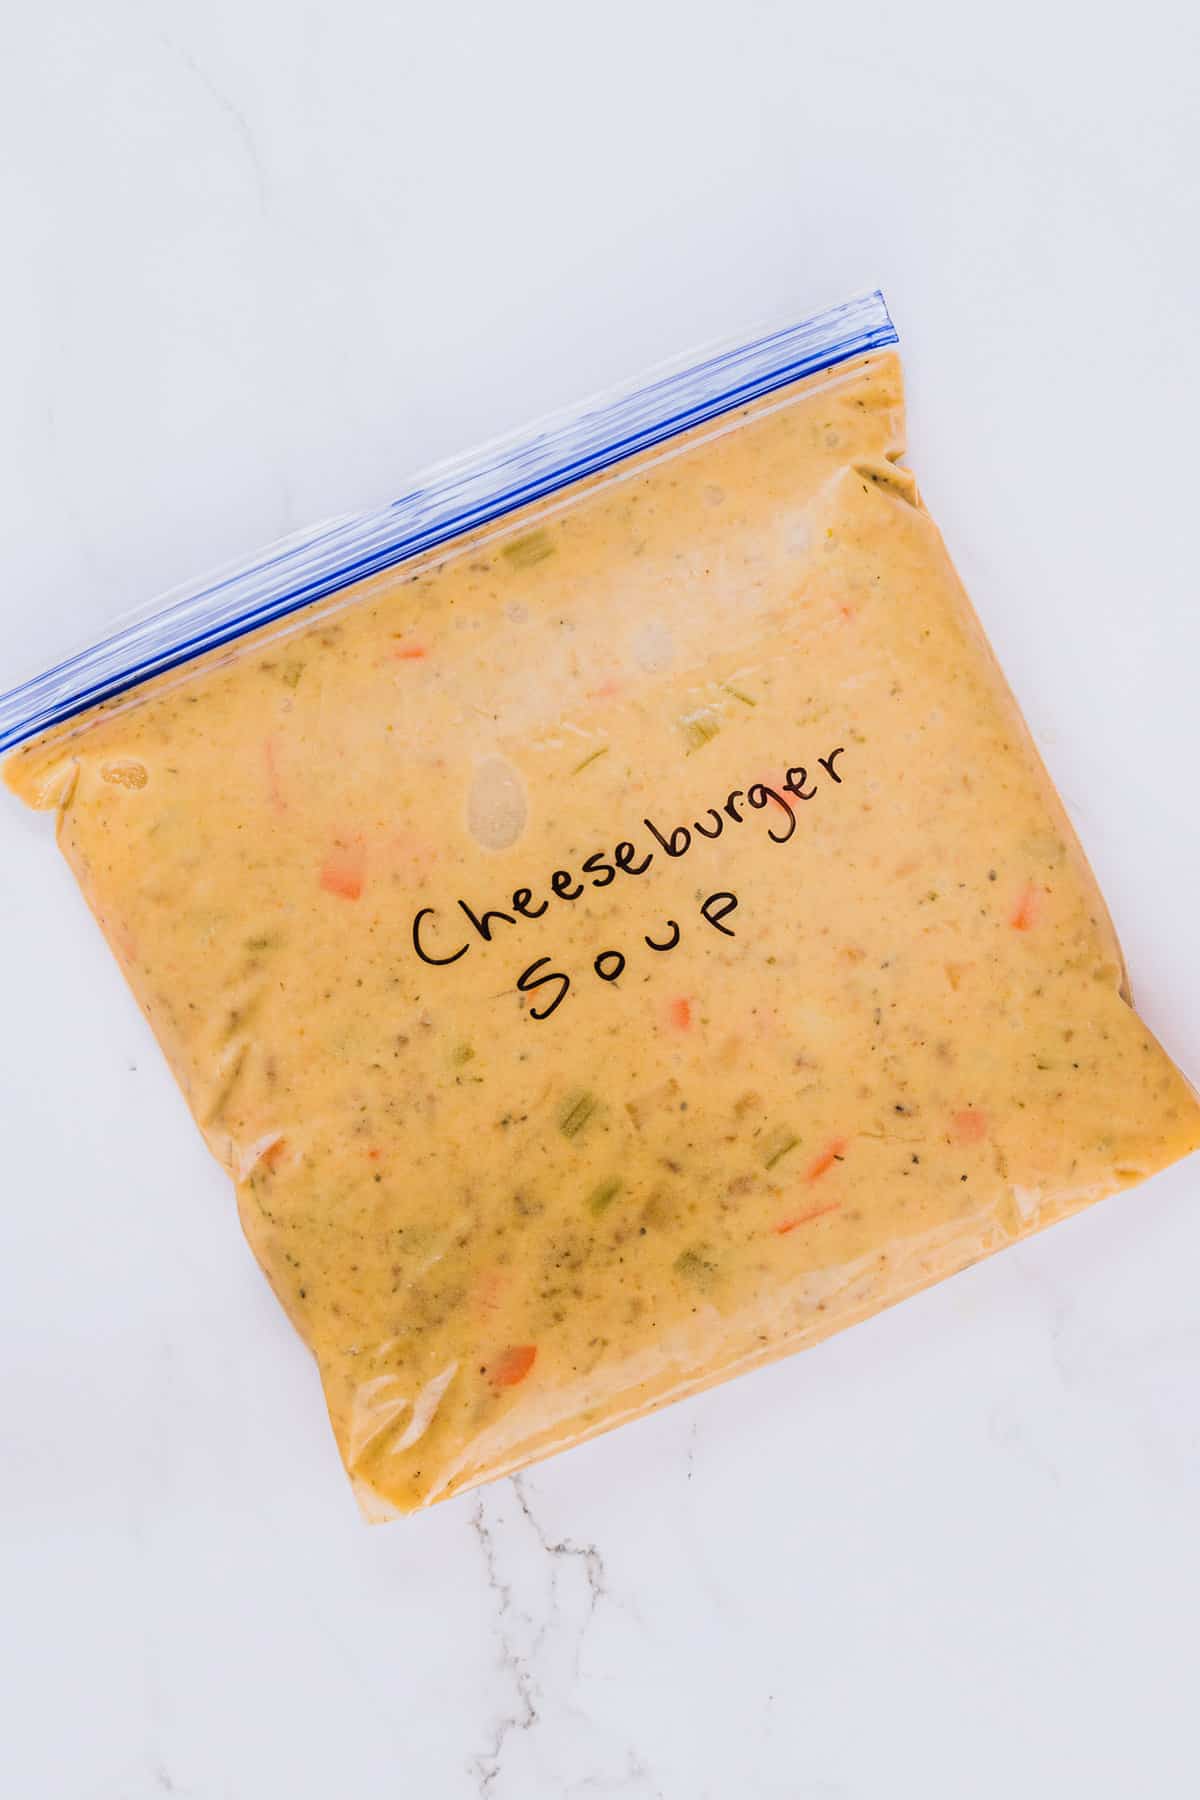 A full gallon-size freezer bag labeled Cheeseburger Soup.